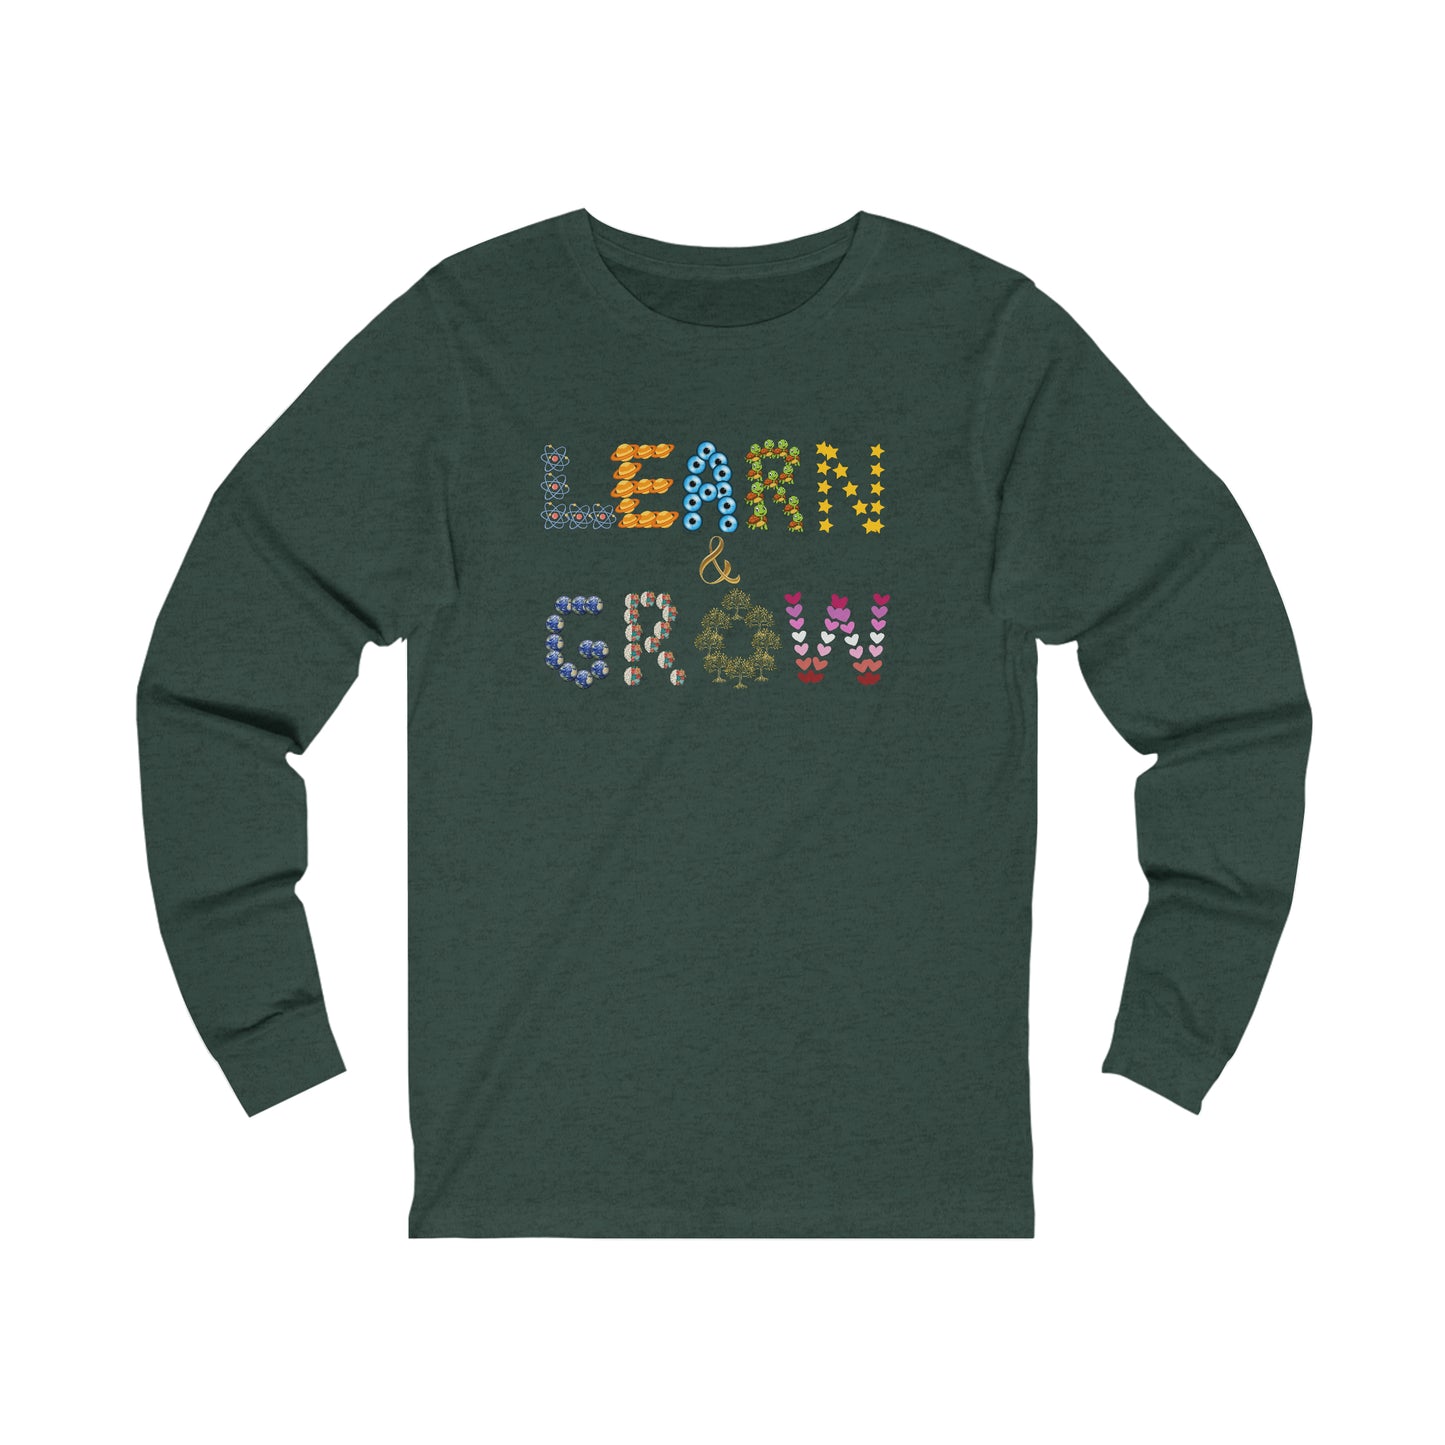 Fun and creative LEARN & GROW Unisex Jersey Long Sleeve Tee.